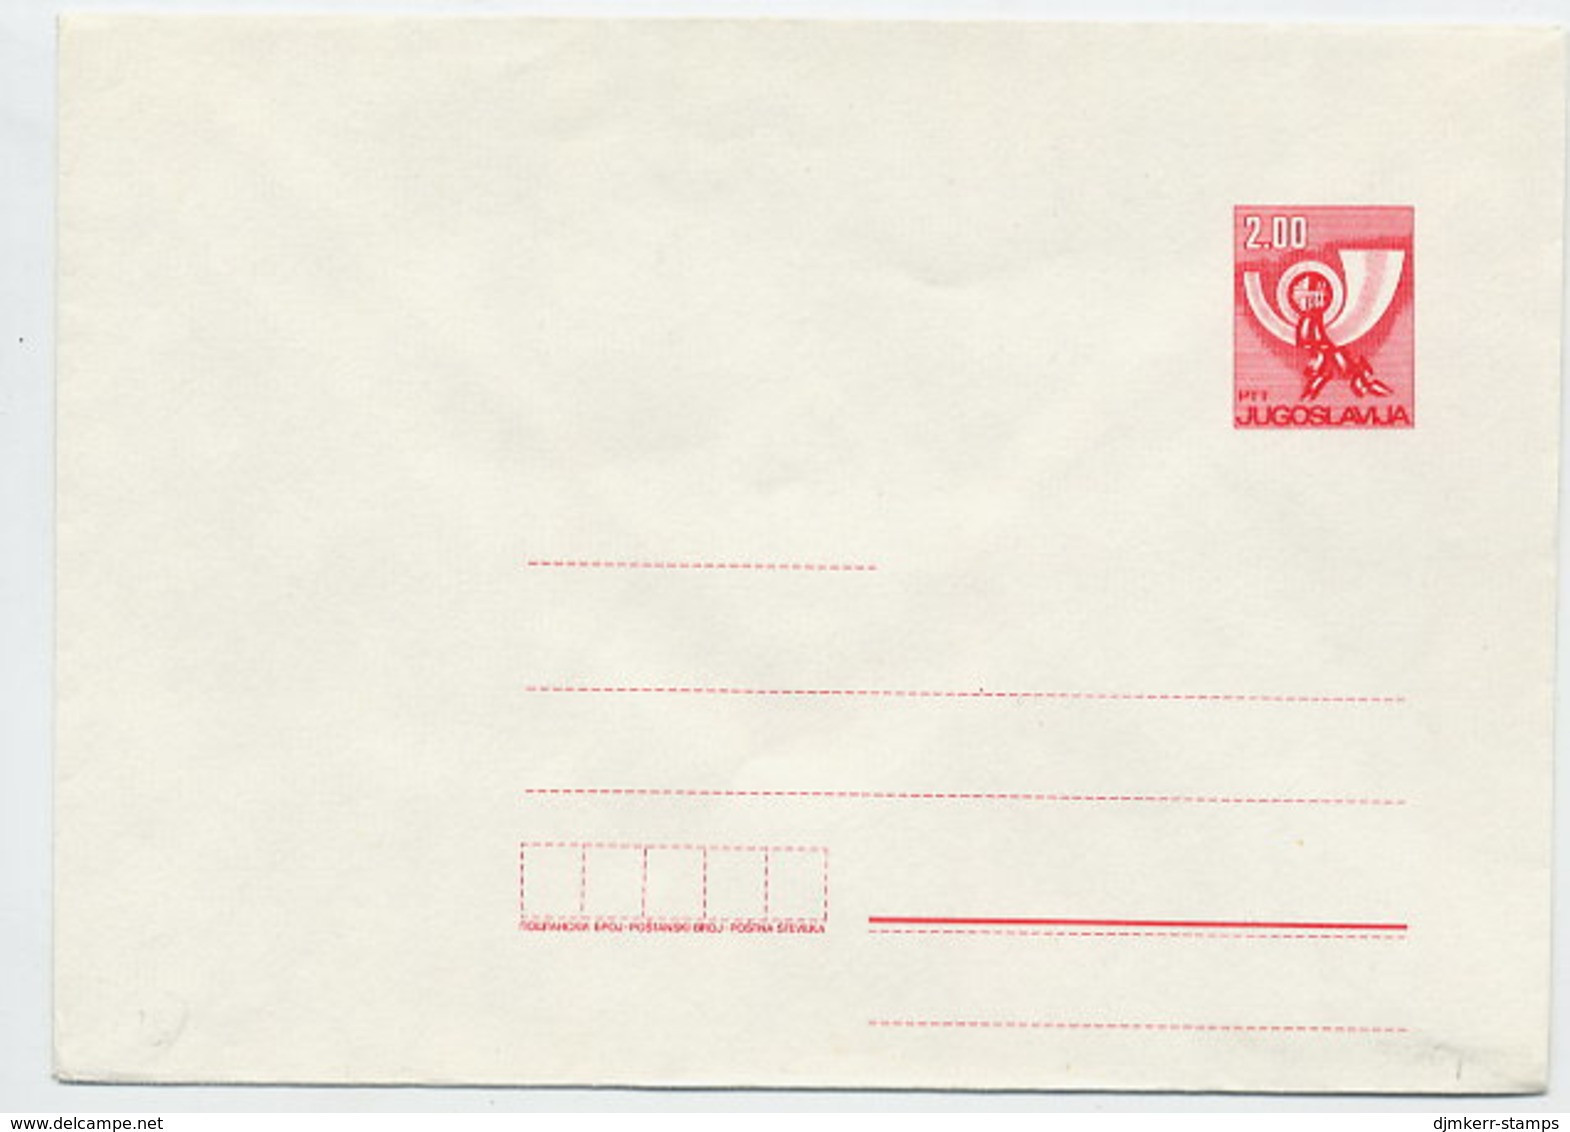 YUGOSLAVIA 1978 Posthorn 2.00 D. Envelope, Unused. Michel U71 - Entiers Postaux